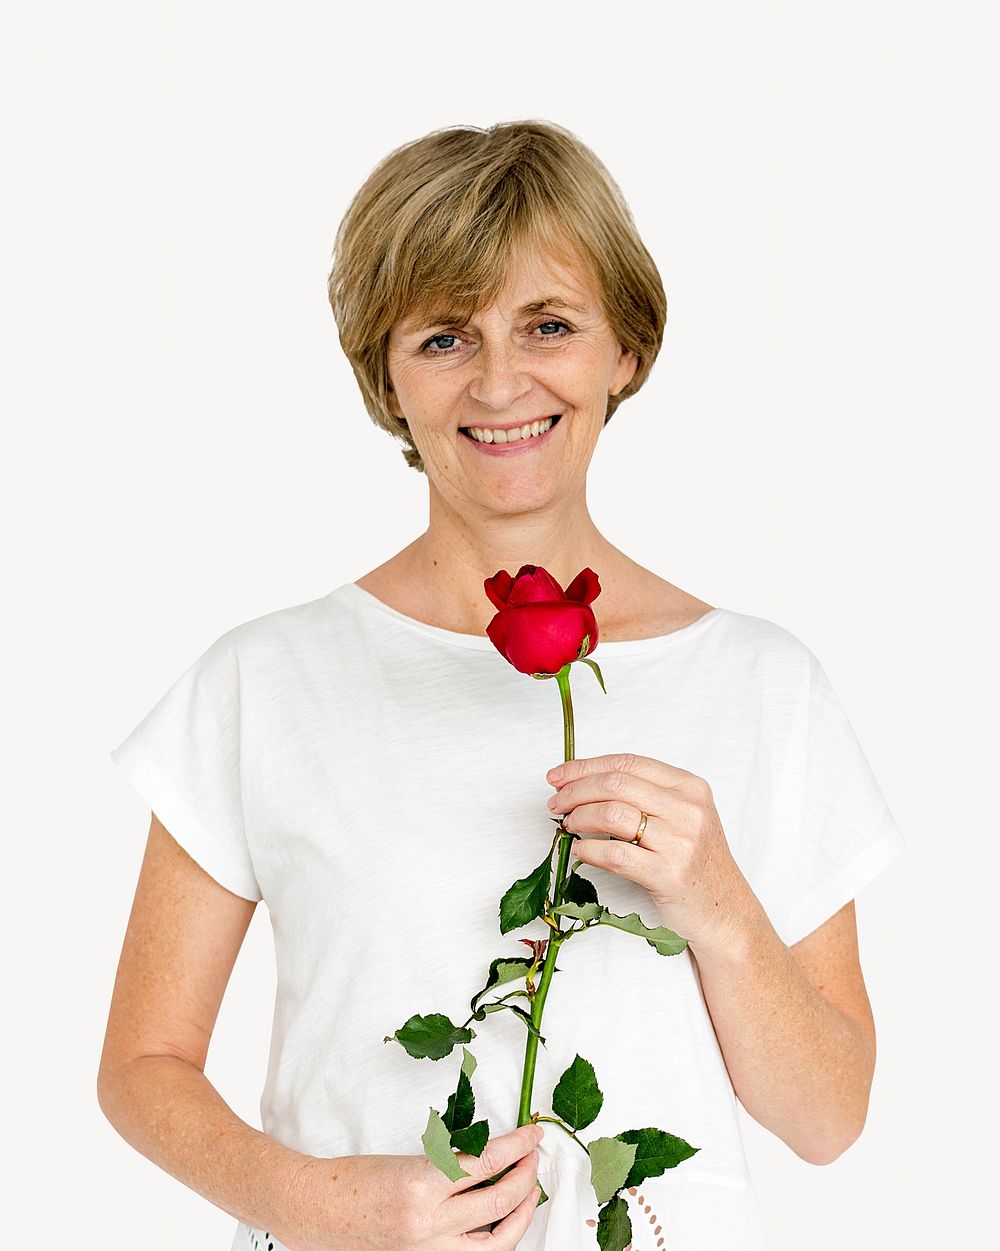 Woman holding rose, isolated image